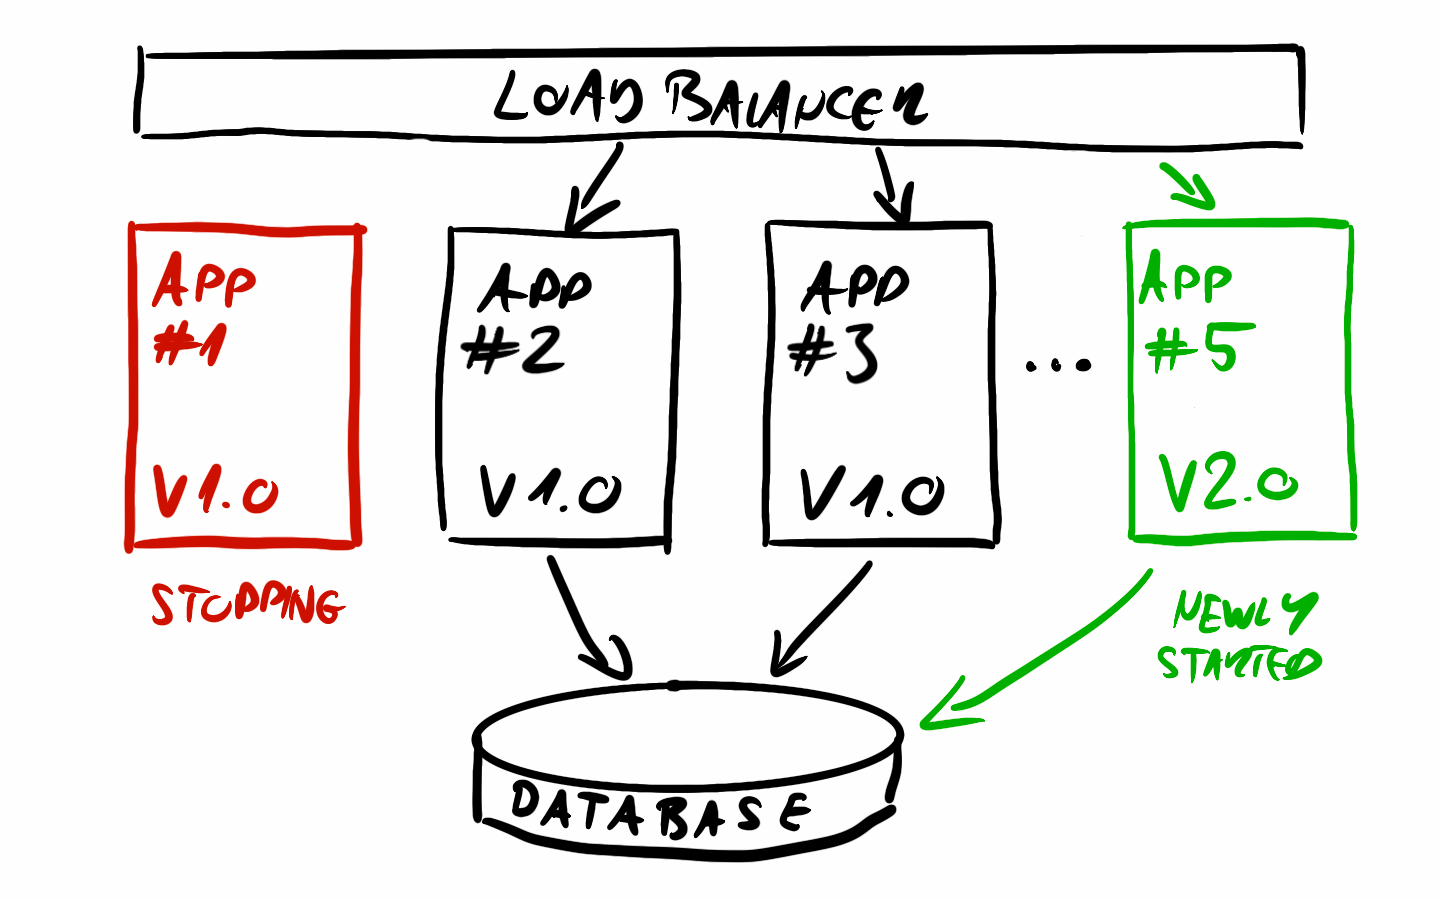 Altering SQL database schemas in production